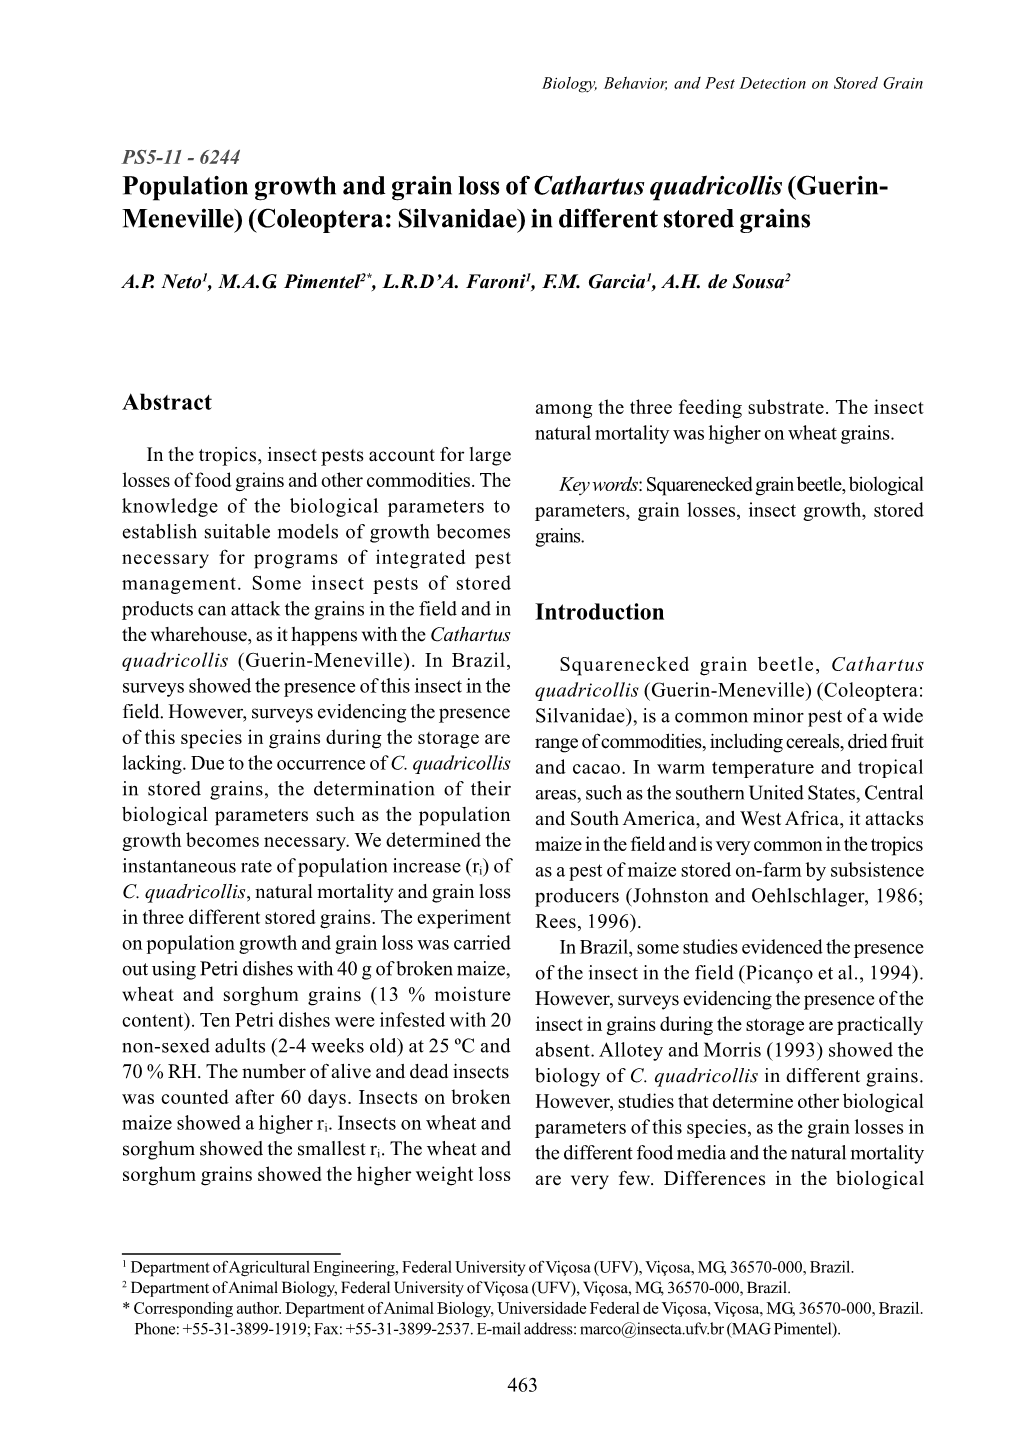 Population Growth and Grain Loss of Cathartus Quadricollis(Guerin